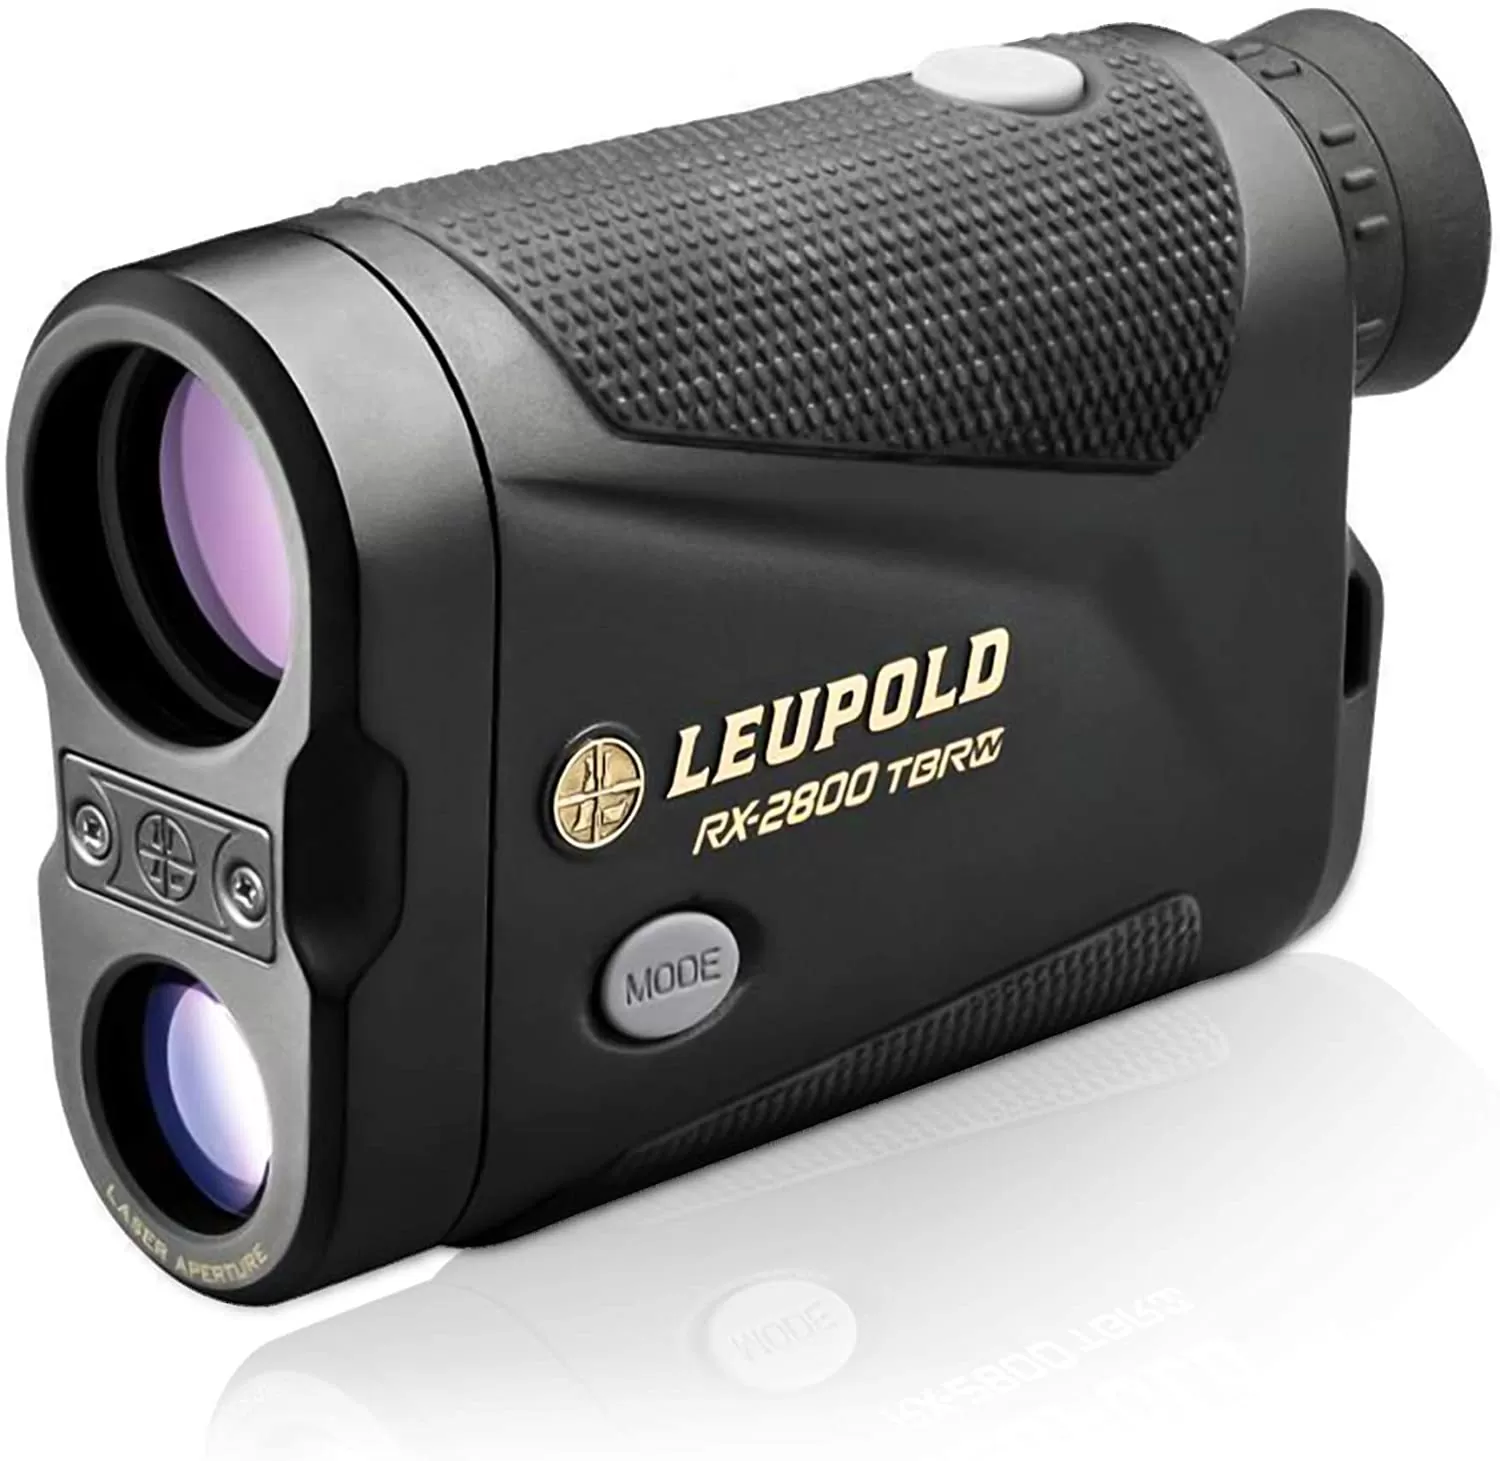 Leupold RX 2800 TBRW Hunting Rangefinder Review